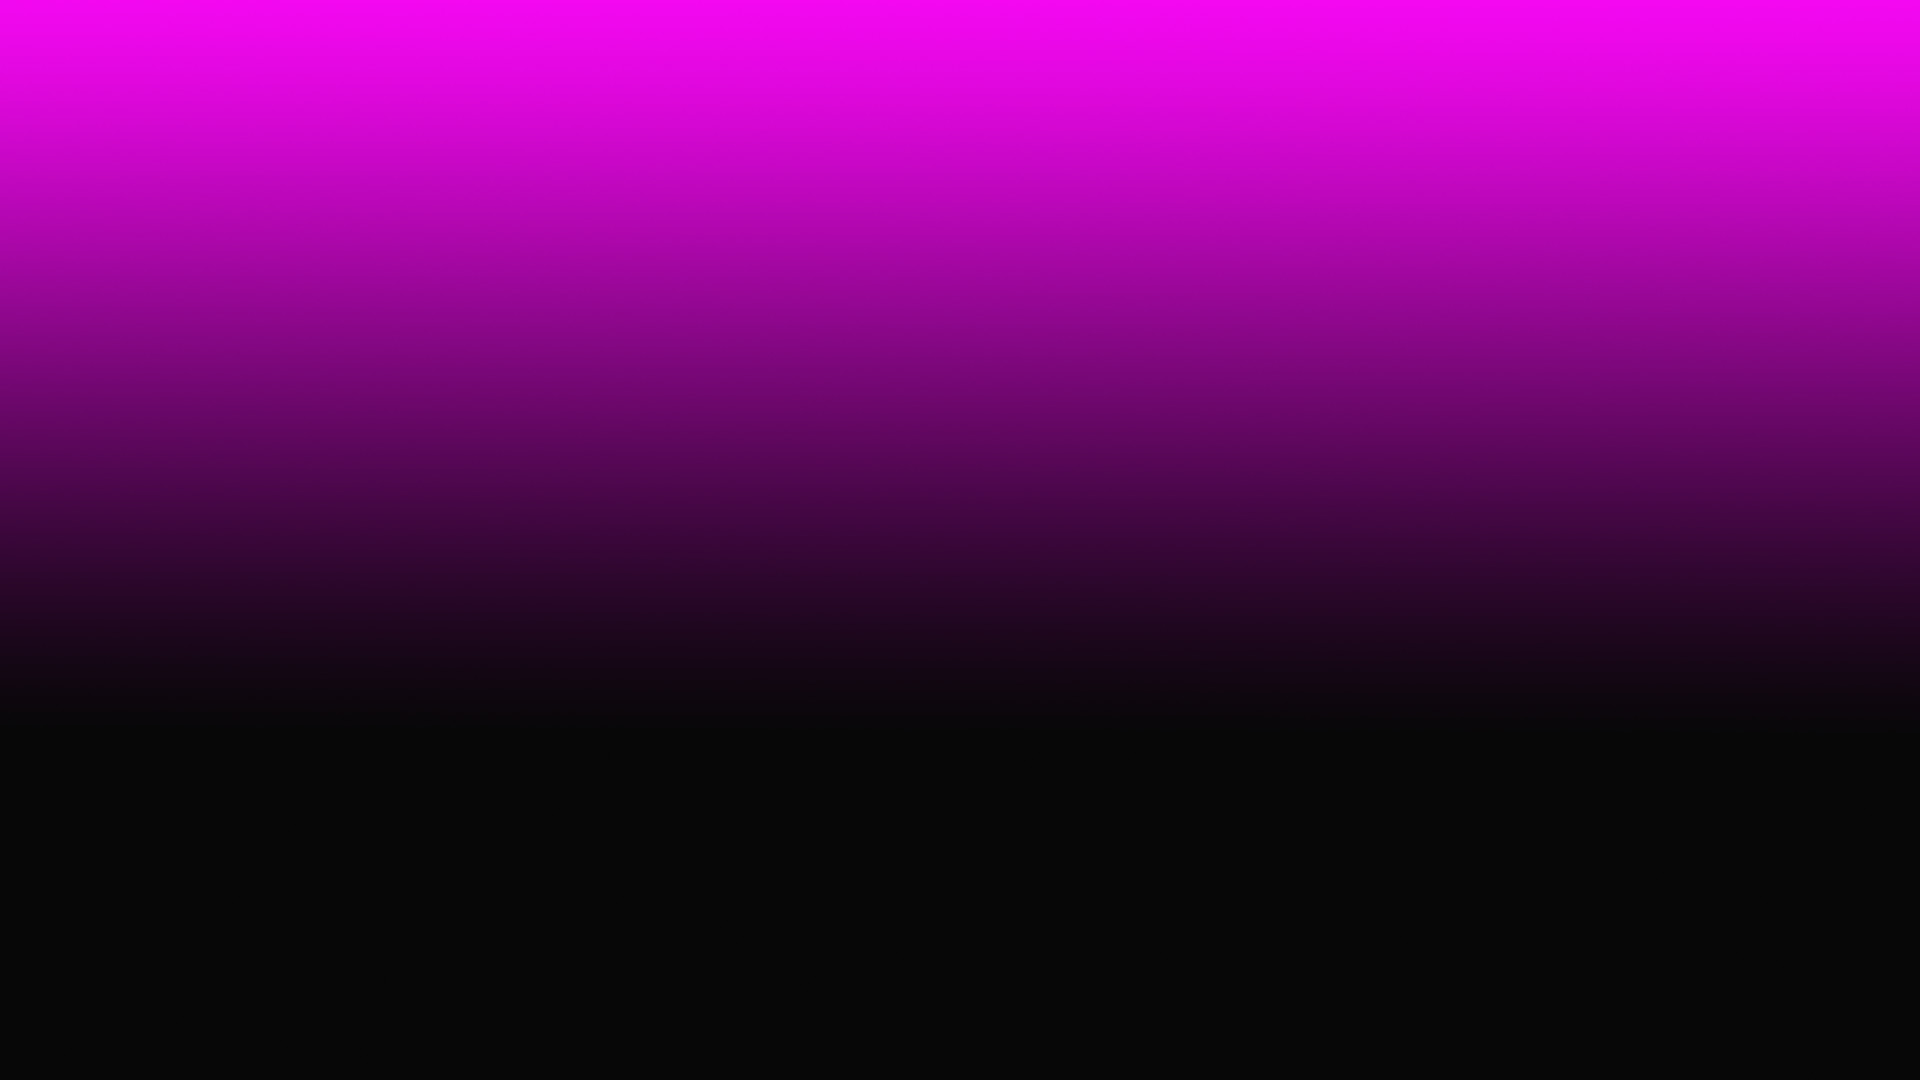 1920x1080 Pink-Black Gradient